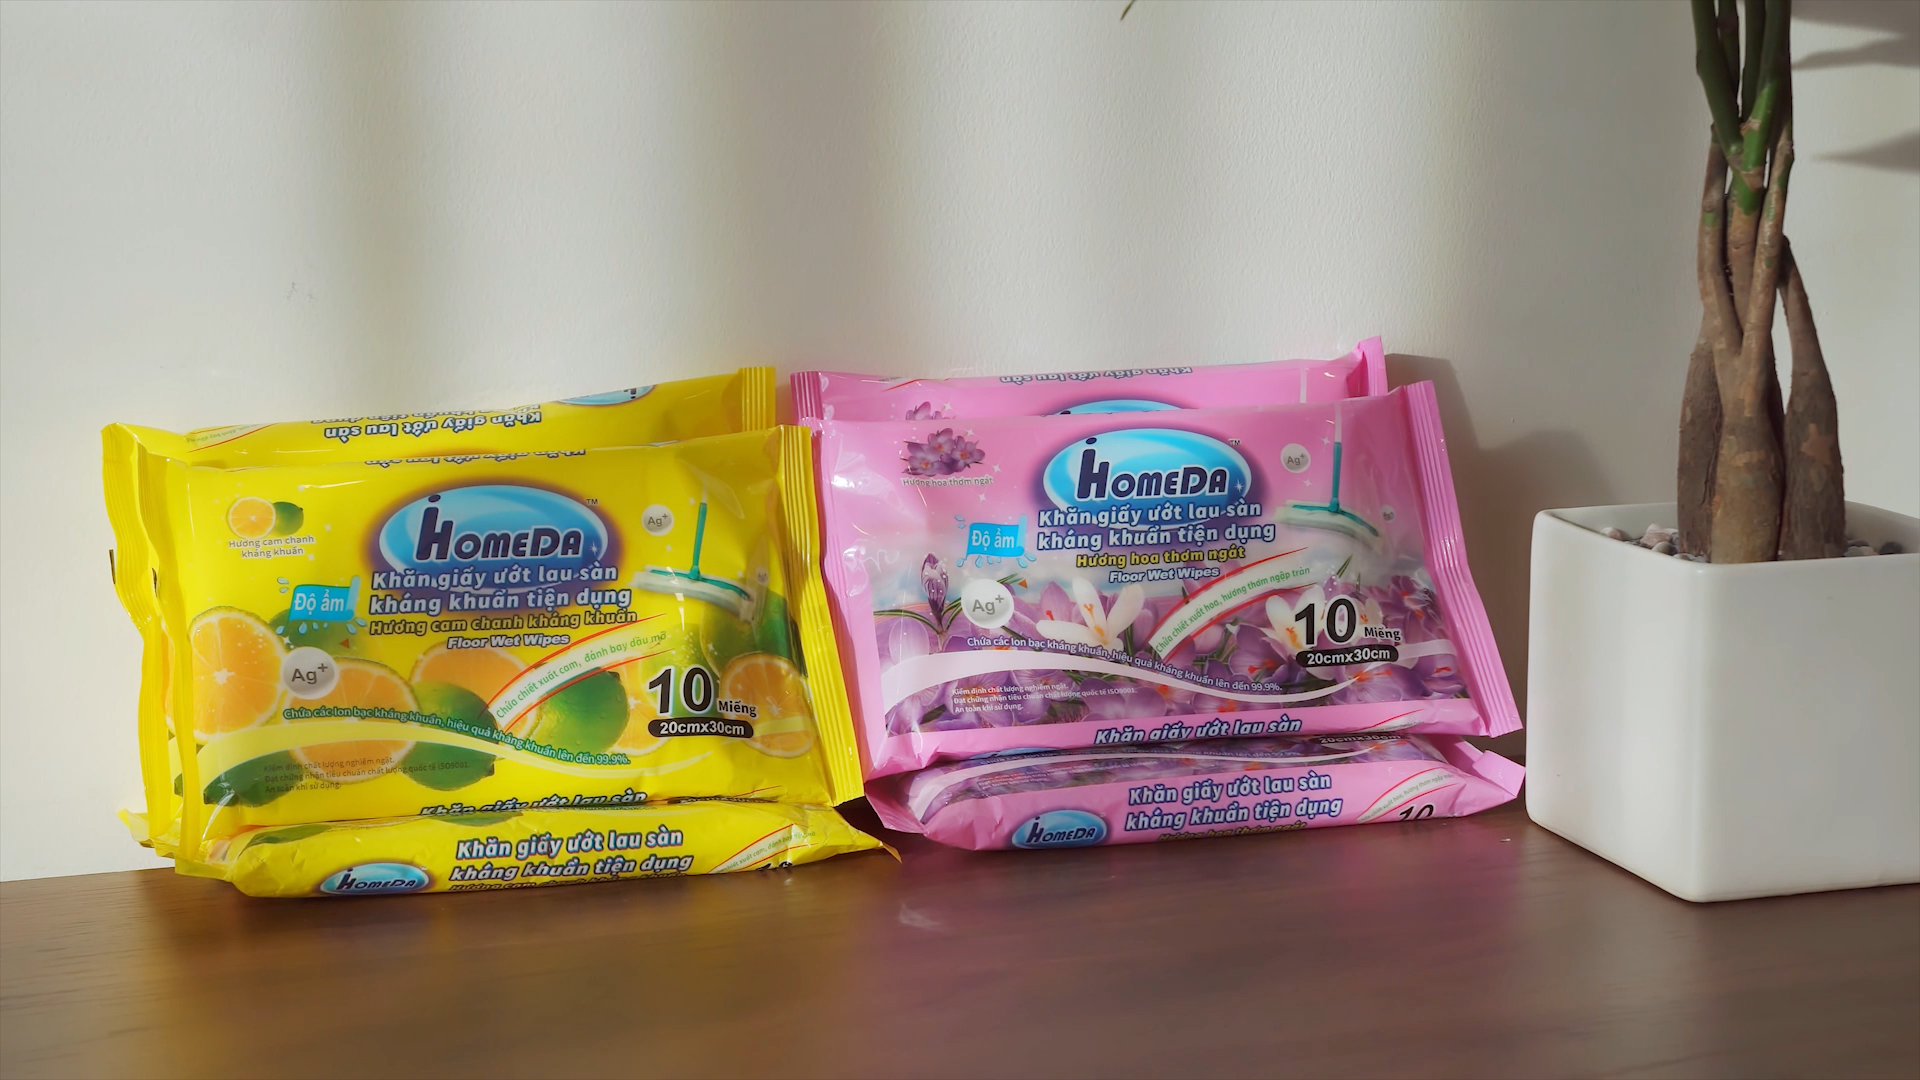 Khăn ướt lau sàn kháng khuẩn tiện dụng IHomeDa - Hương Cam ( 10 miếng ) - iHomeda anti bacteria floor and kitchen wet wipes - Orange Lime Scent ( 10 sheets per package)